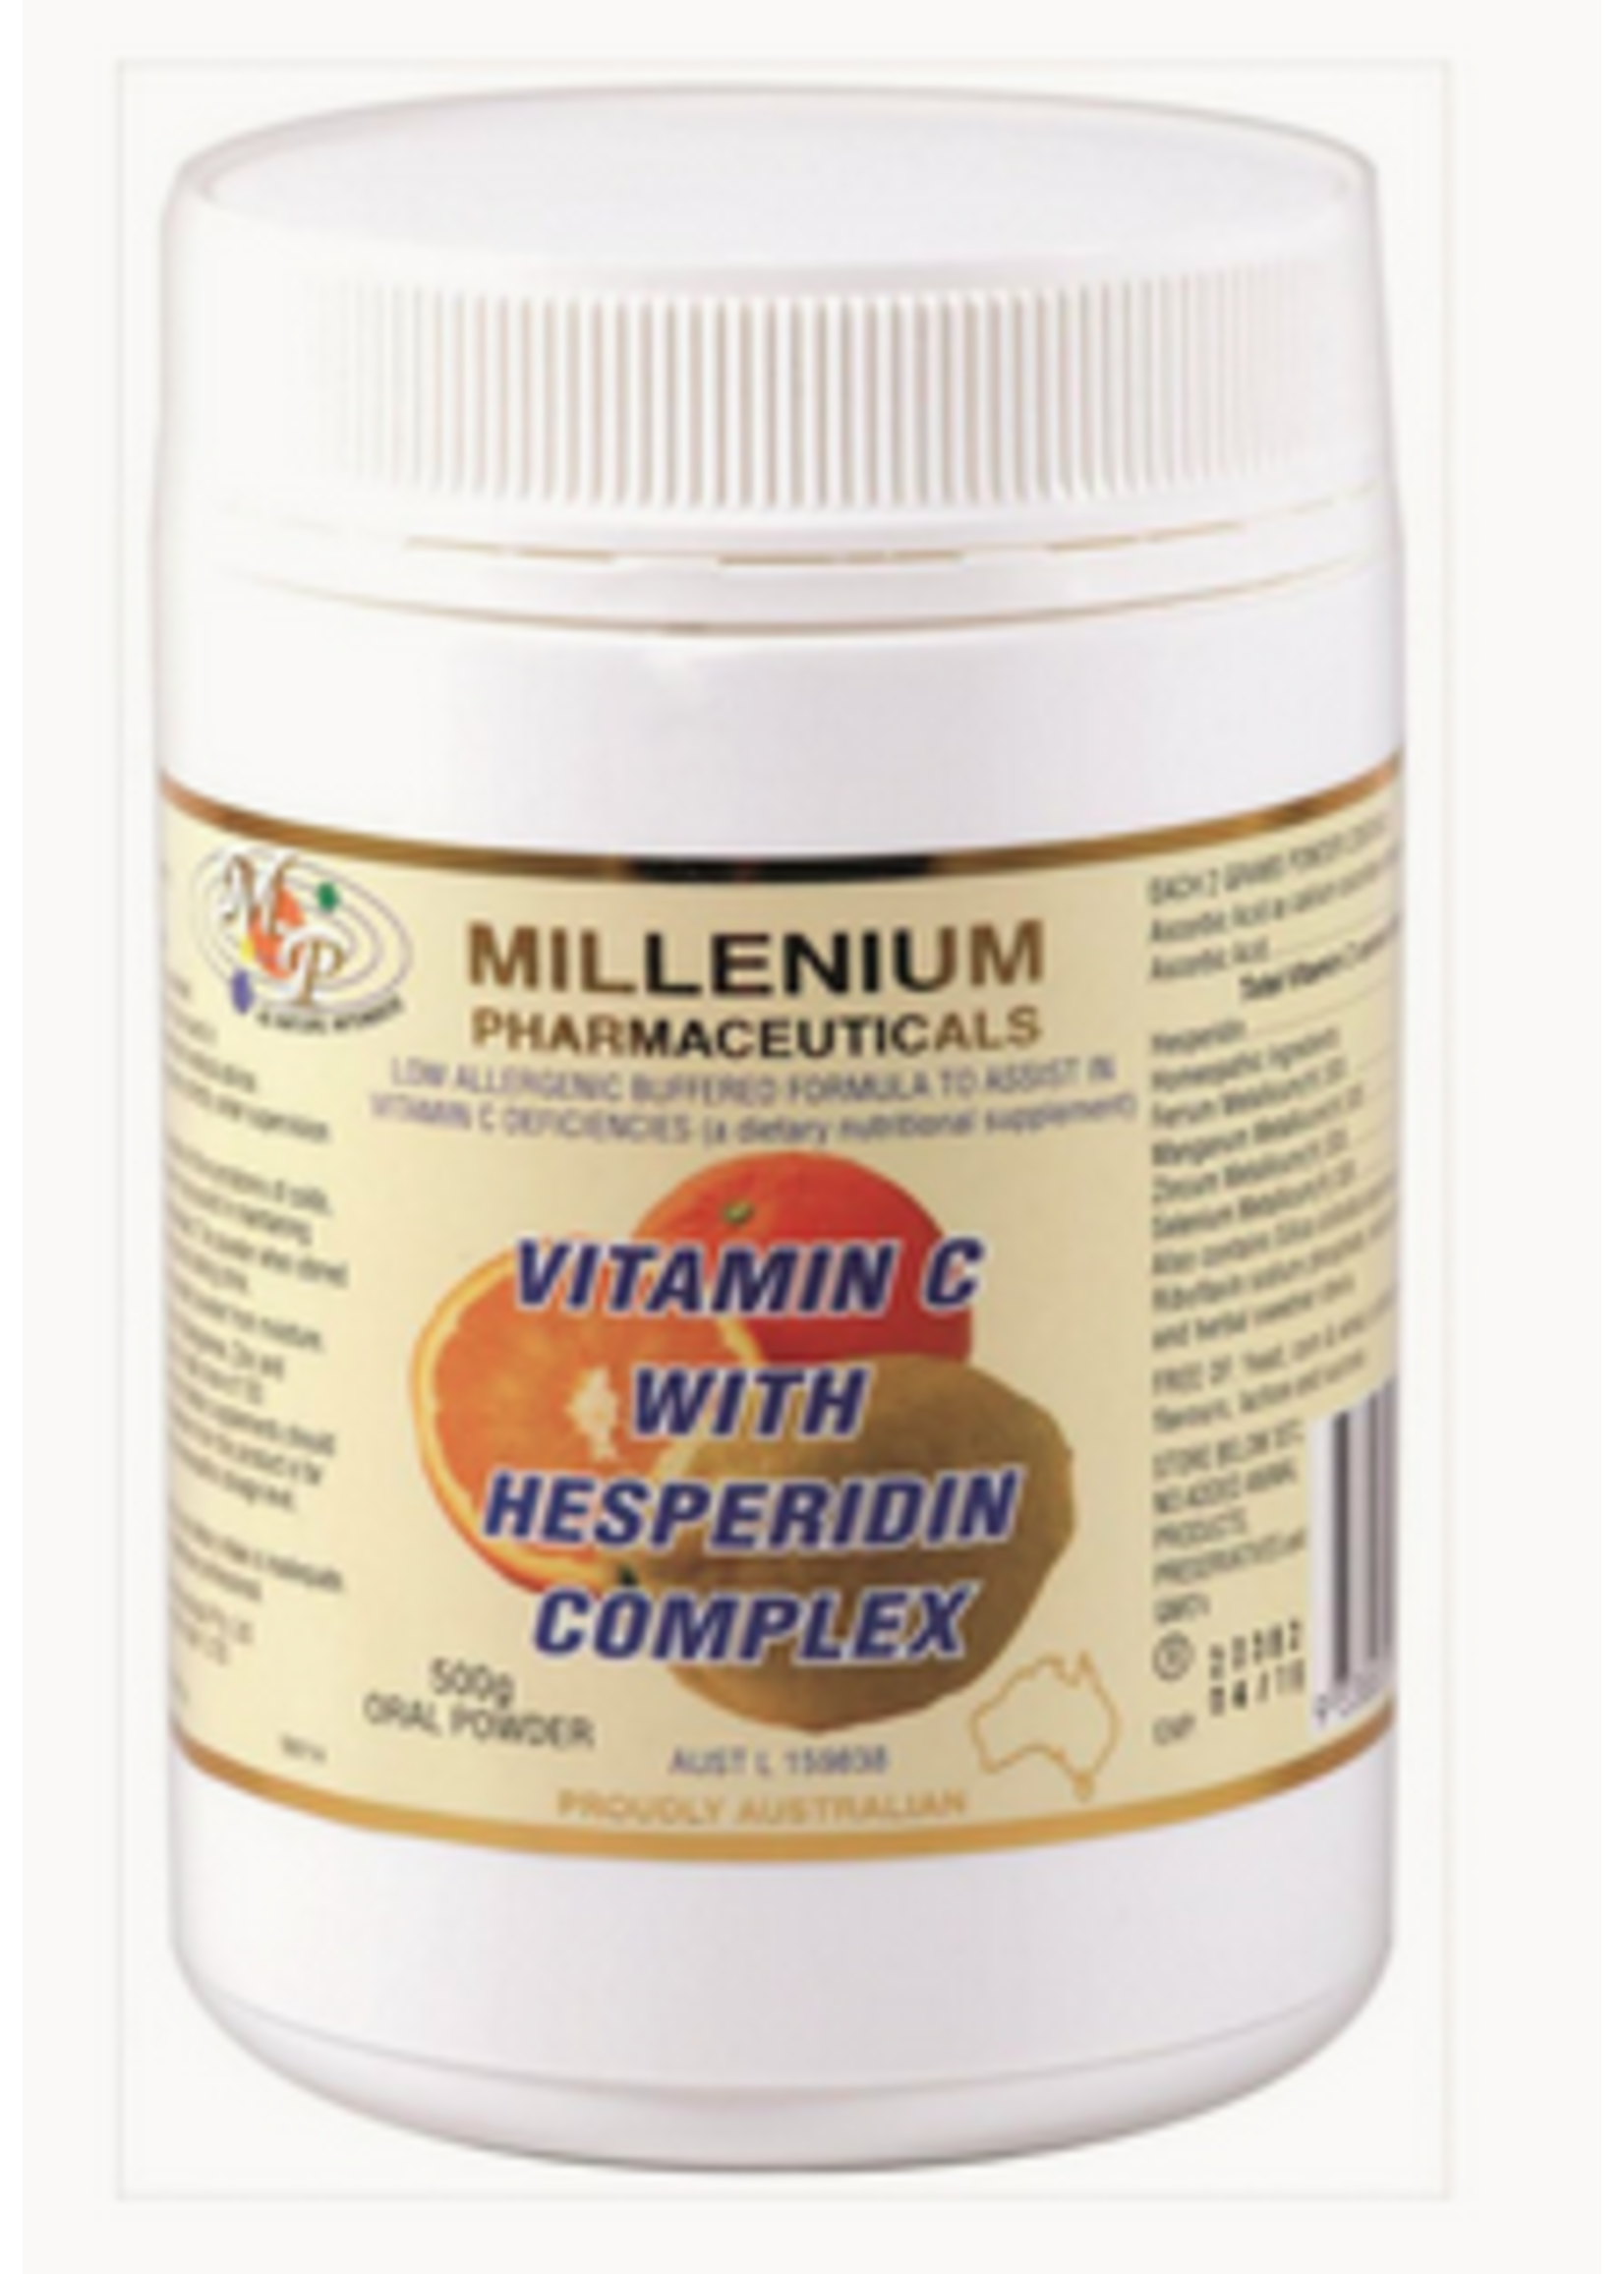 Millenium Pharmaceuticals Millenium Pharmaceuticals Vitamin C with Hesperidin 500g